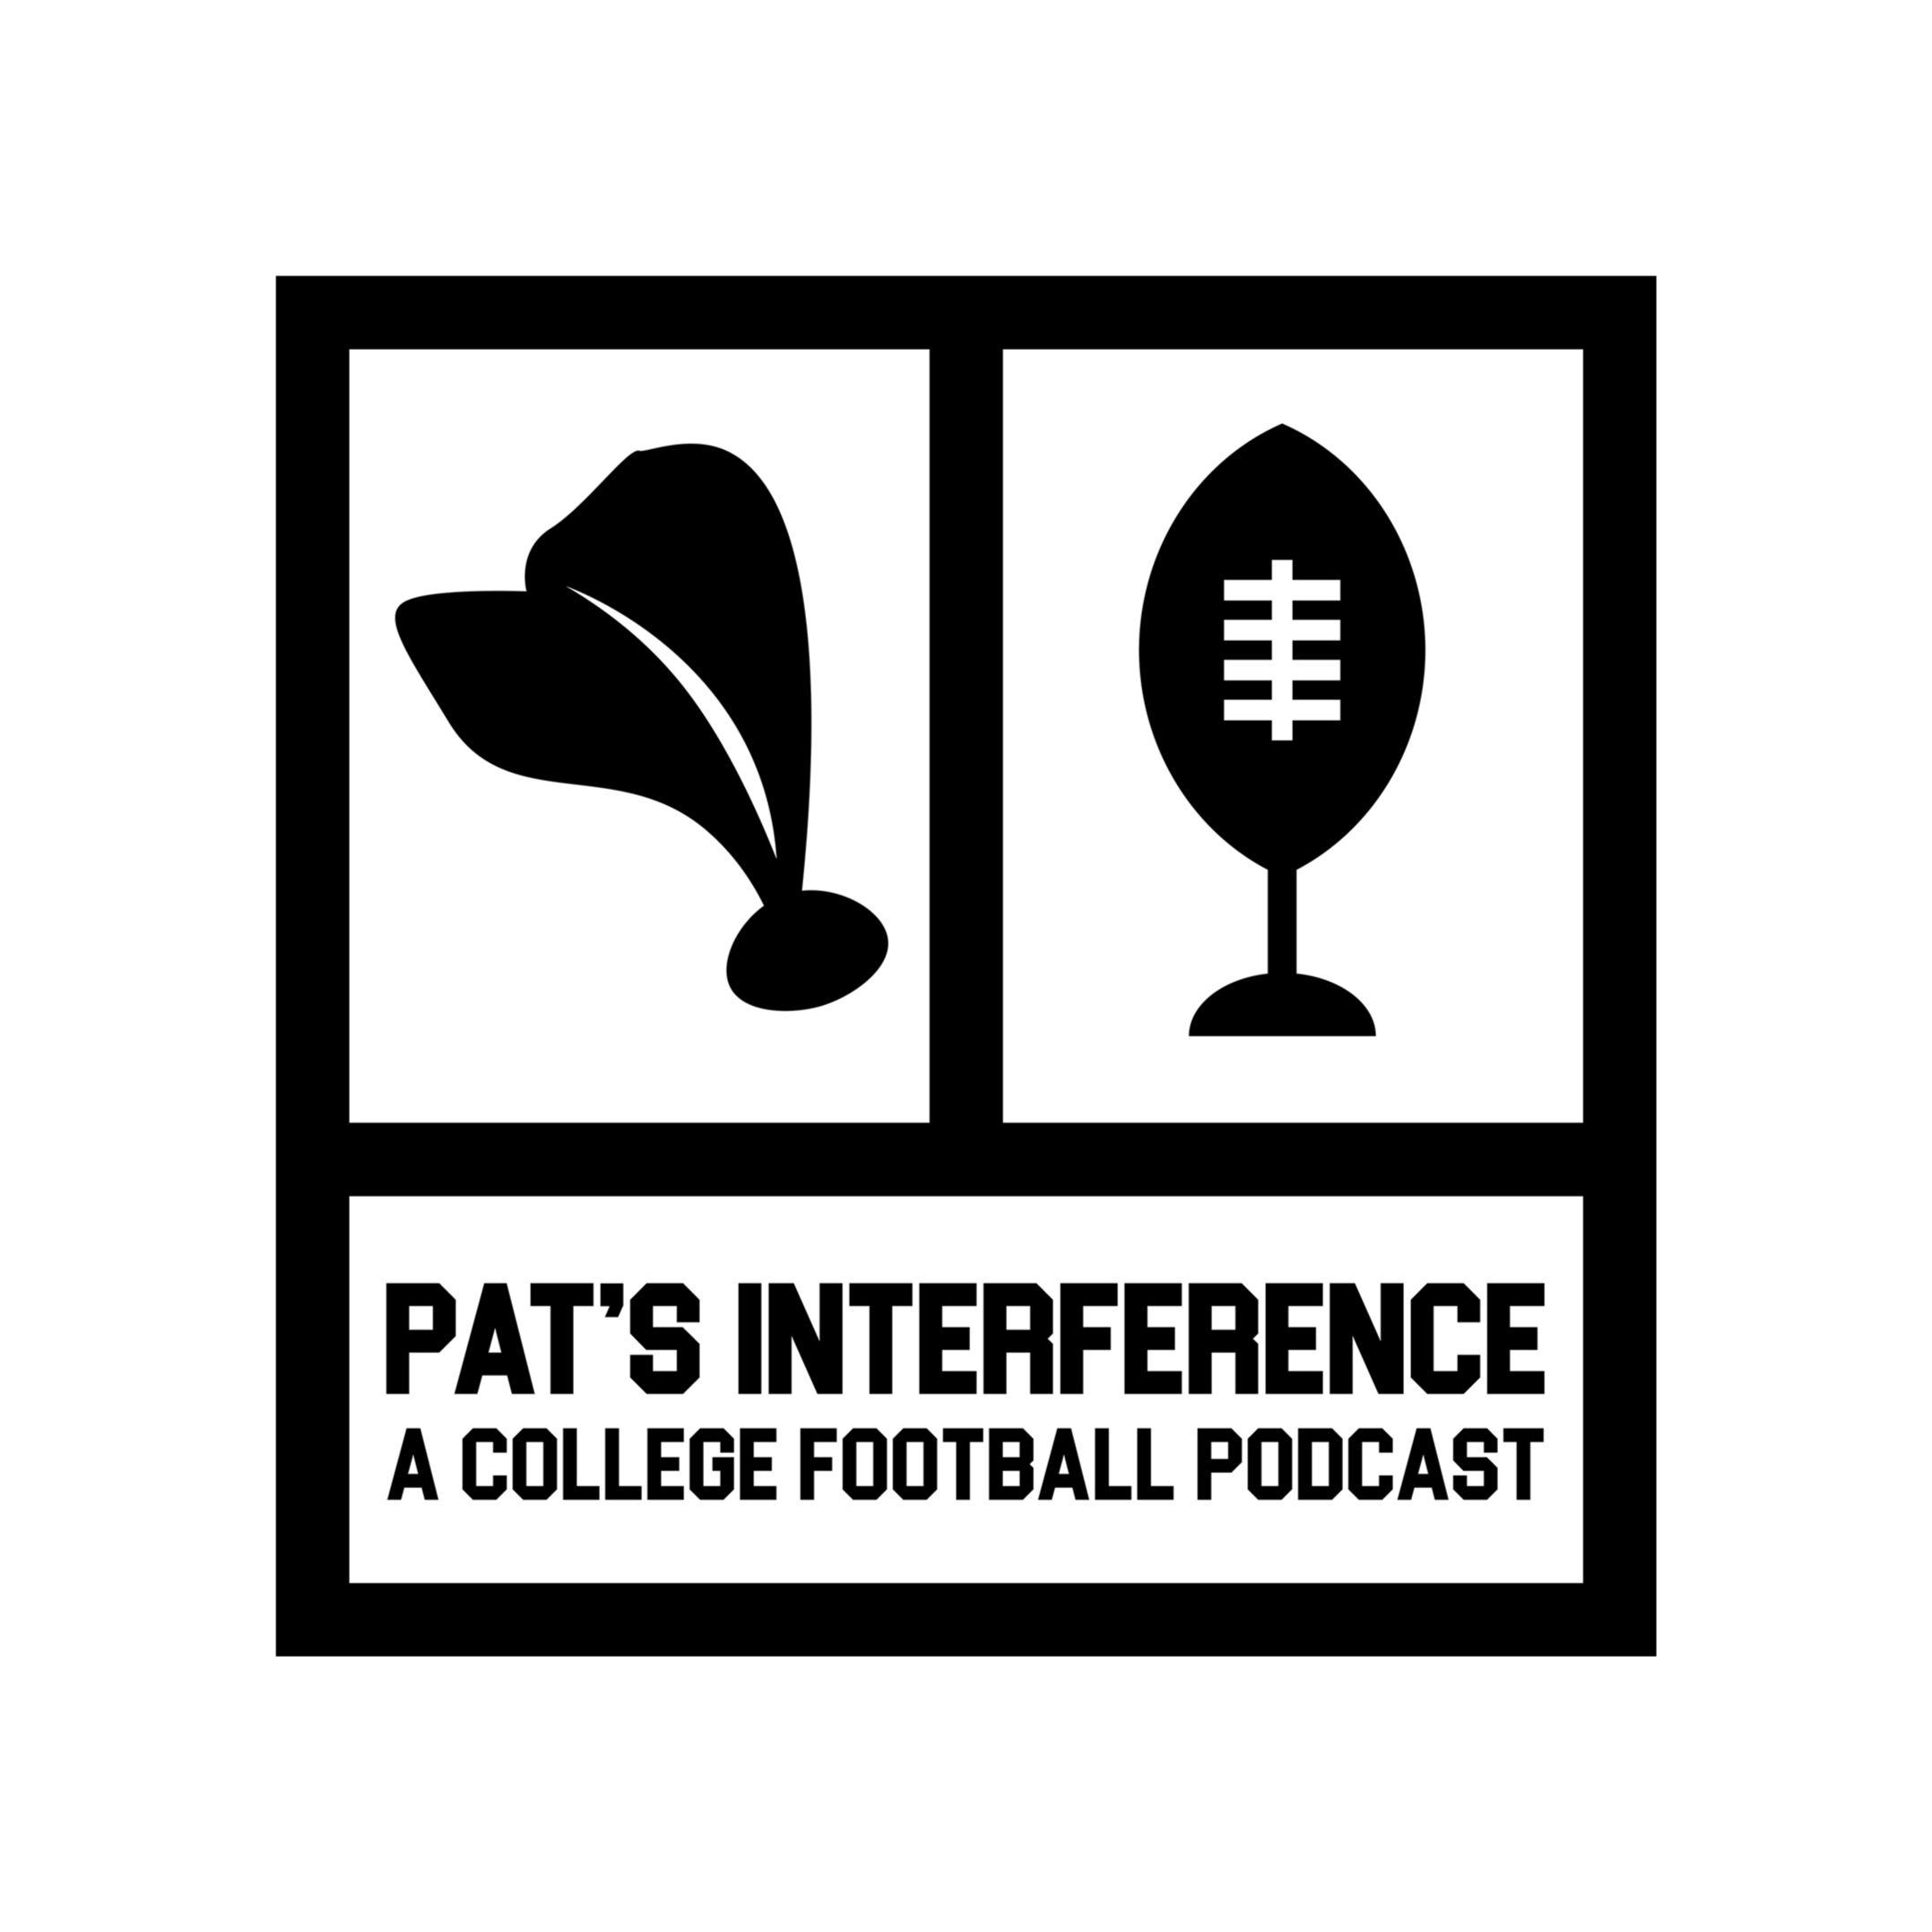 Pat's Interference - Nick Saban Retires, Bama Hires Deboer, & Natty Reactions